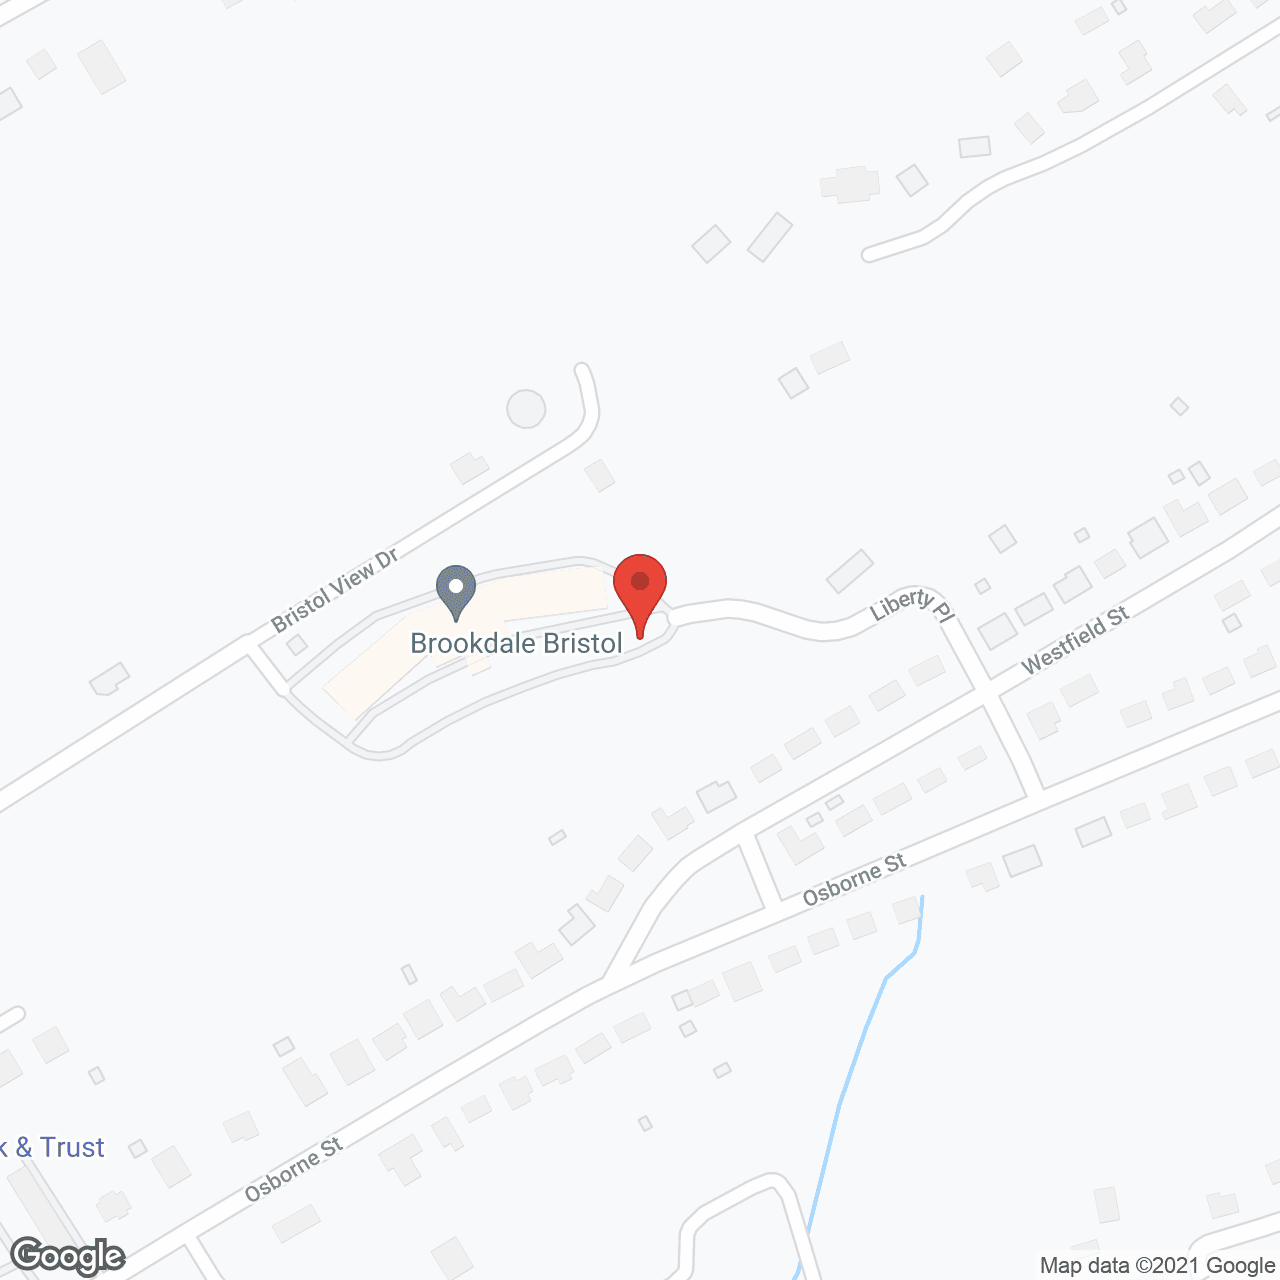 Brookdale Bristol in google map